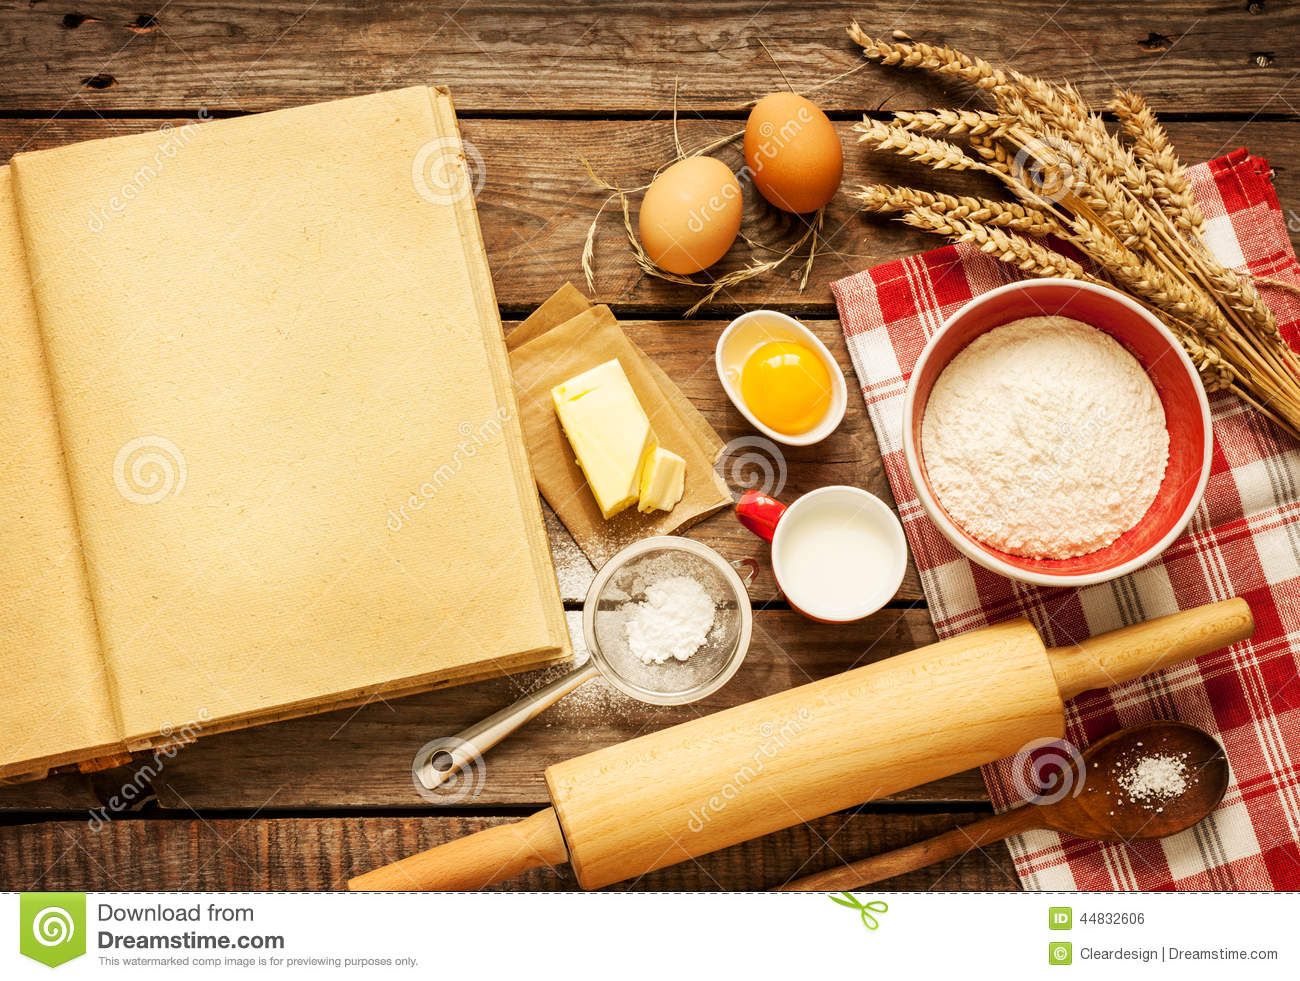 flour wallpaper,rolling pin,dairy,still life,wooden spoon,food